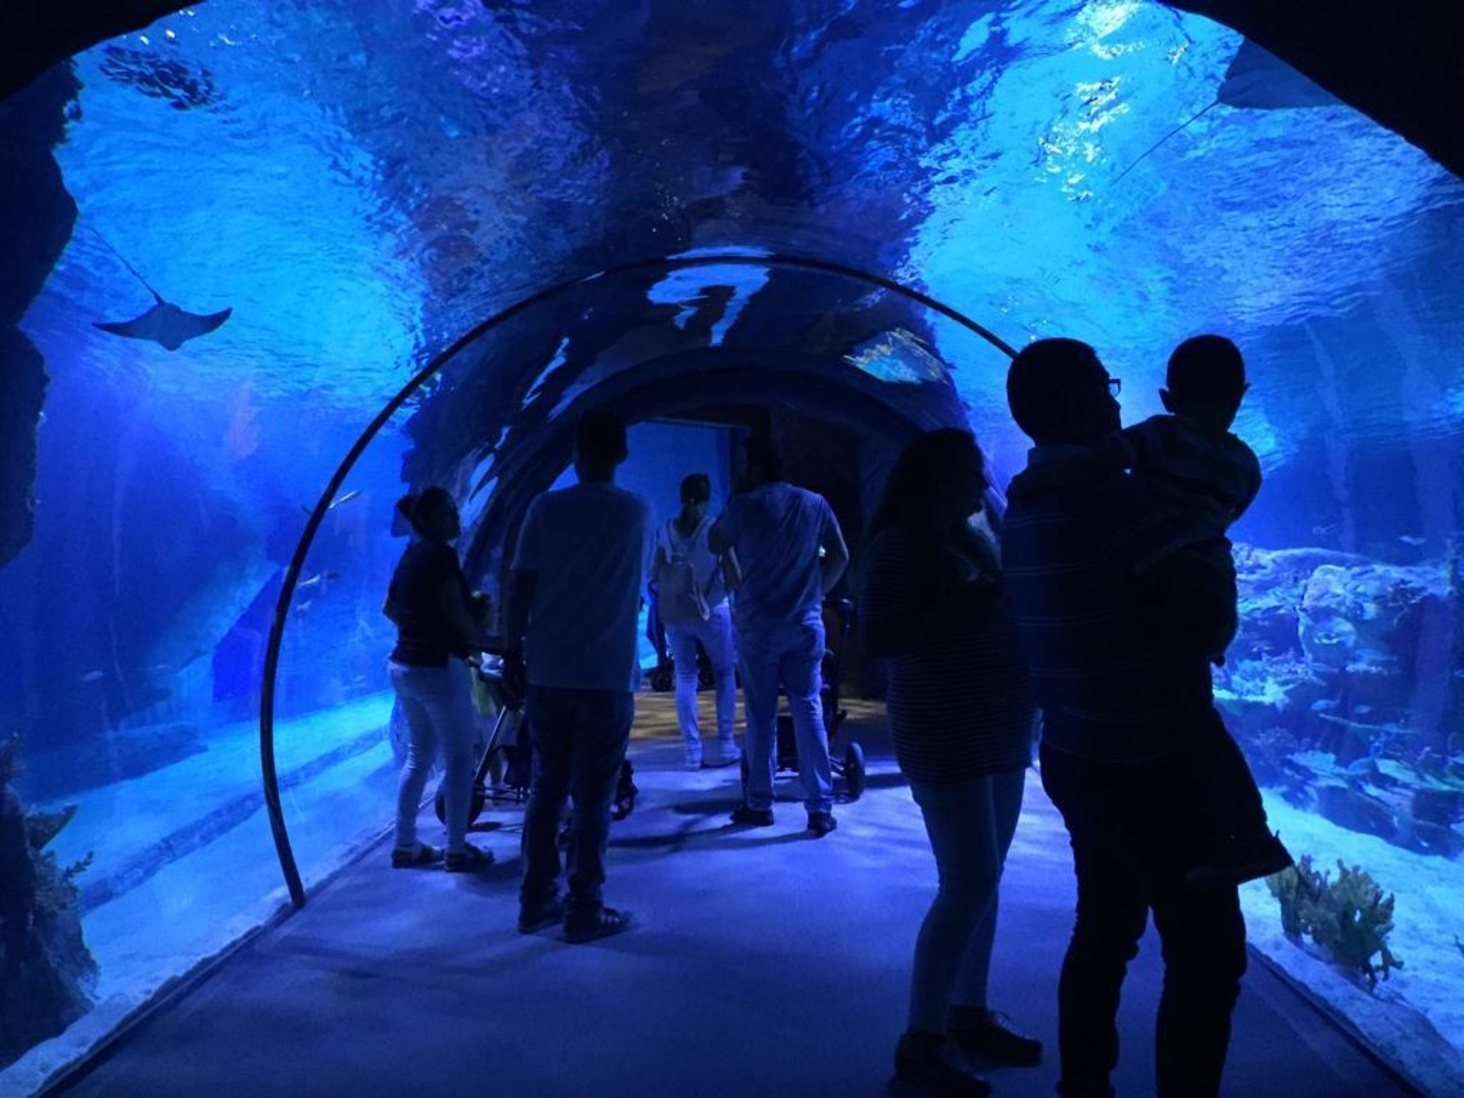 Океанариум Fantastic Aquariums Измир